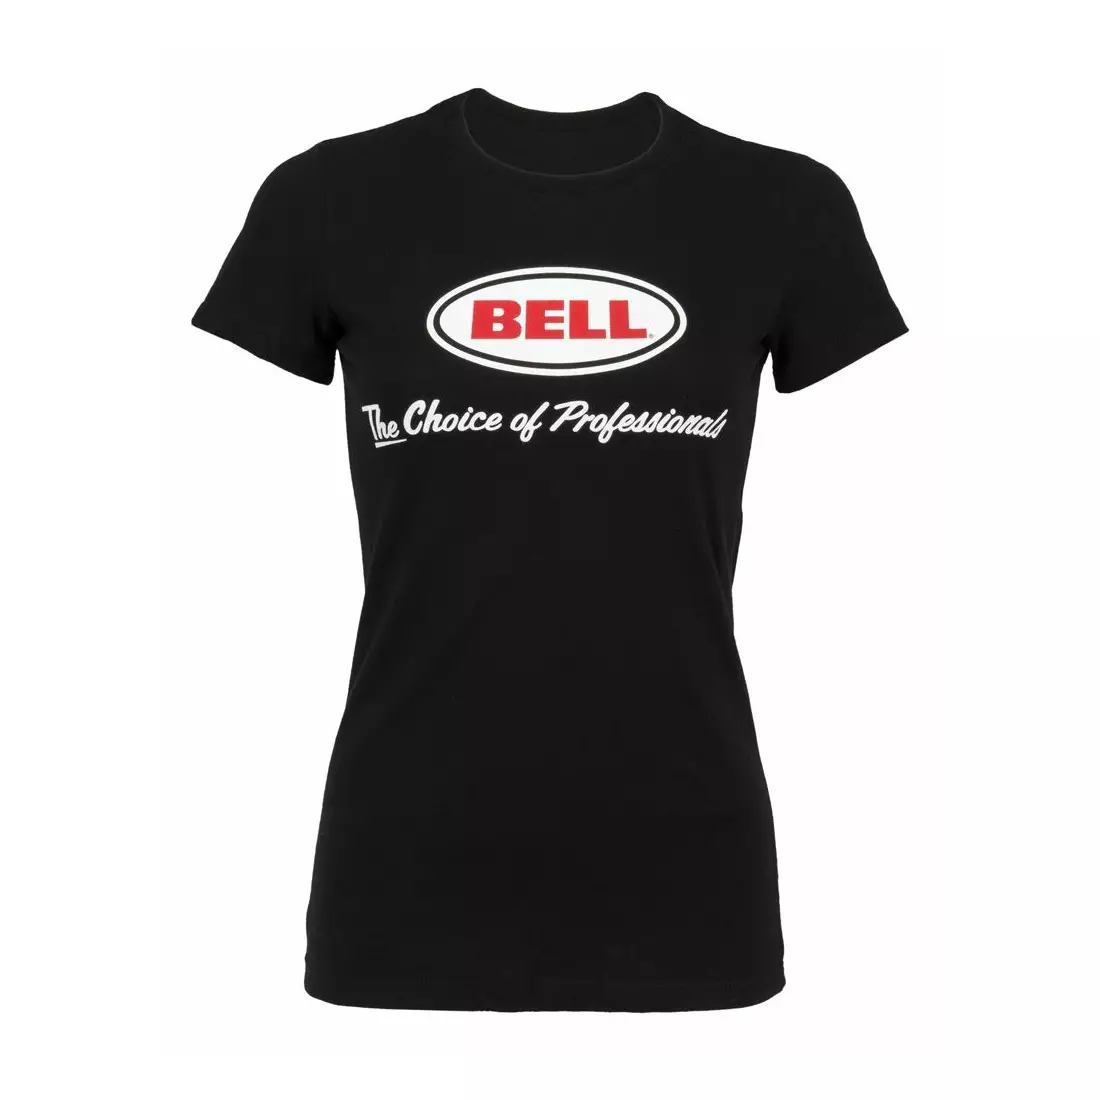 BELL damska koszulka z krótkim rękawem BASIC CHOICE OF PROS black BEL-7070720